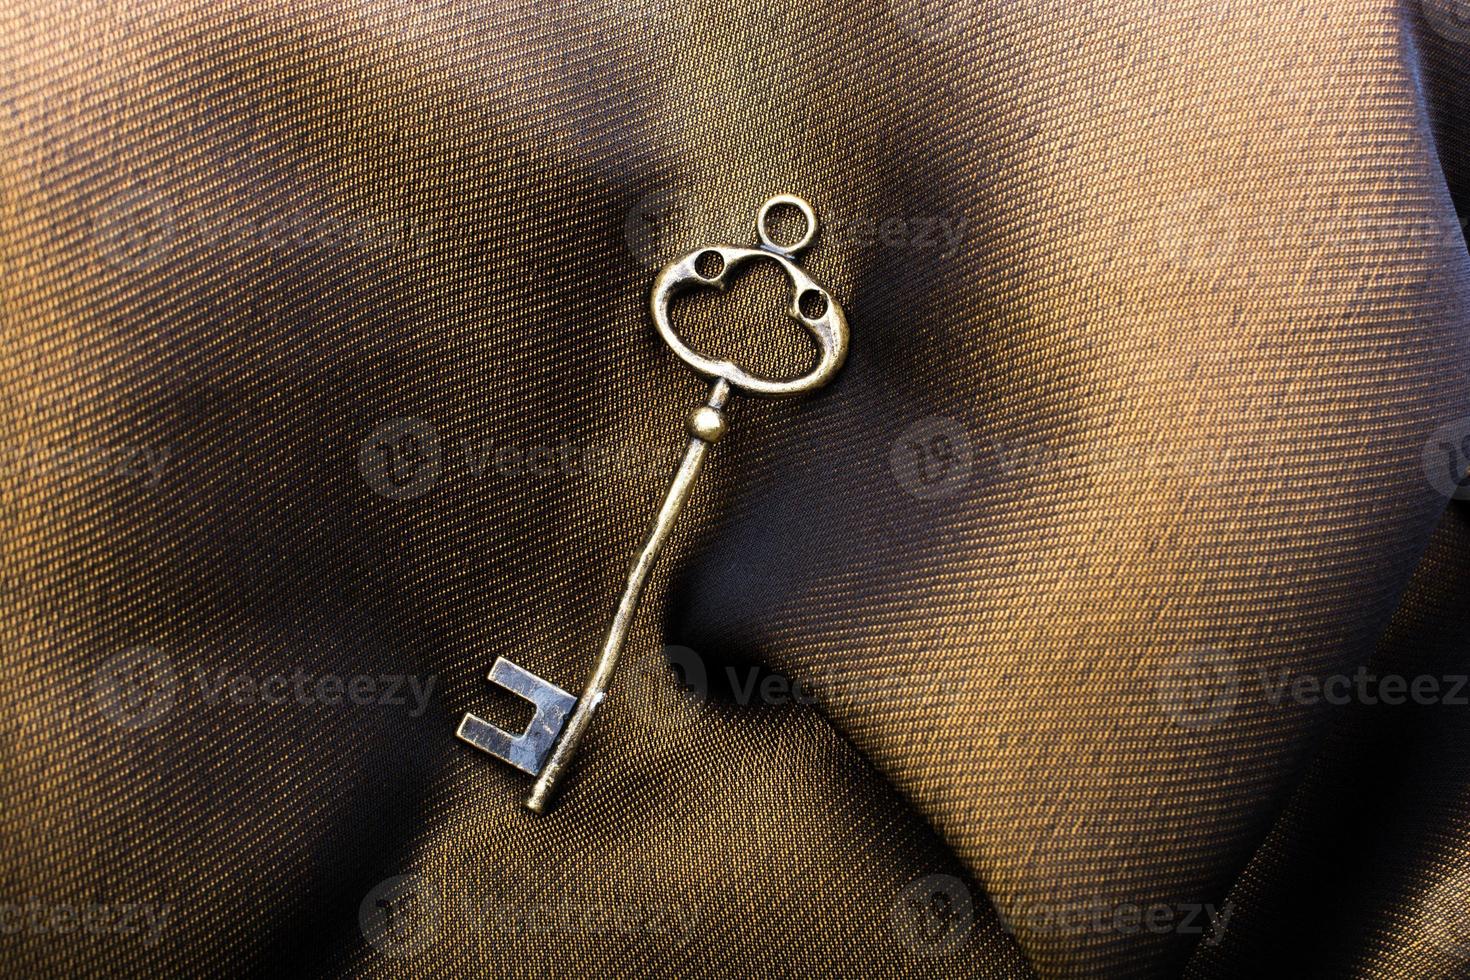 Retro styled key decorative key photo